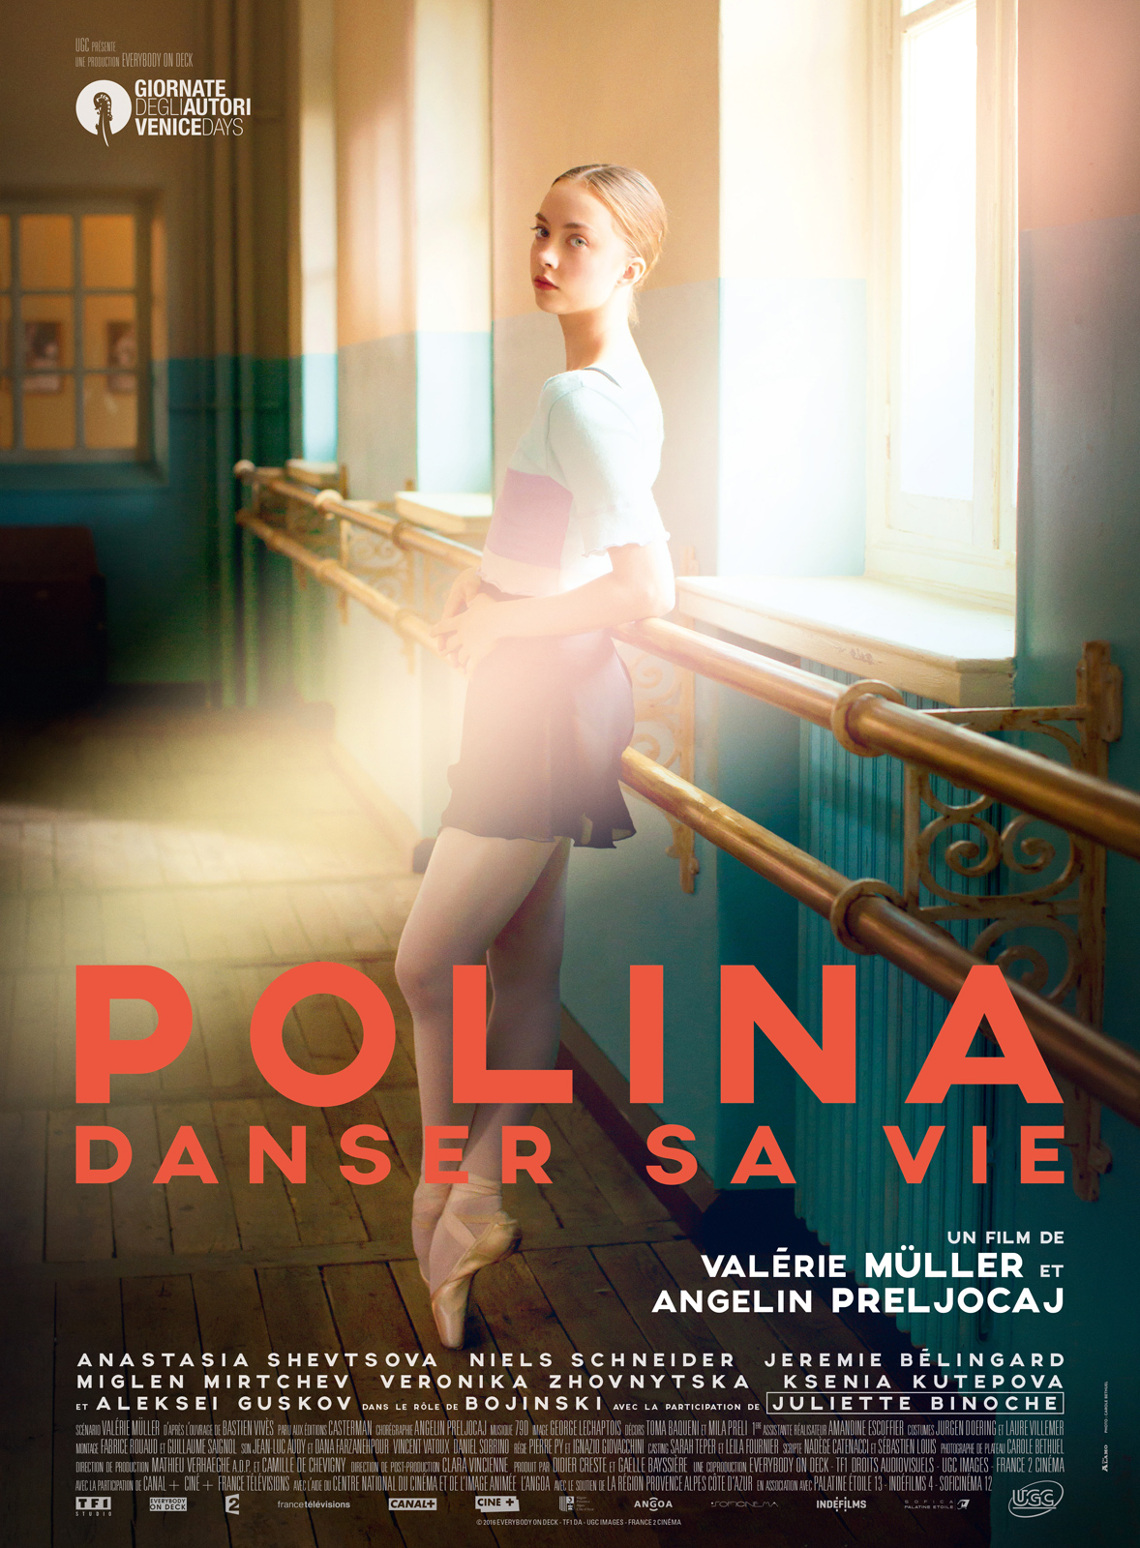 Polina, danser sa vie poster 2